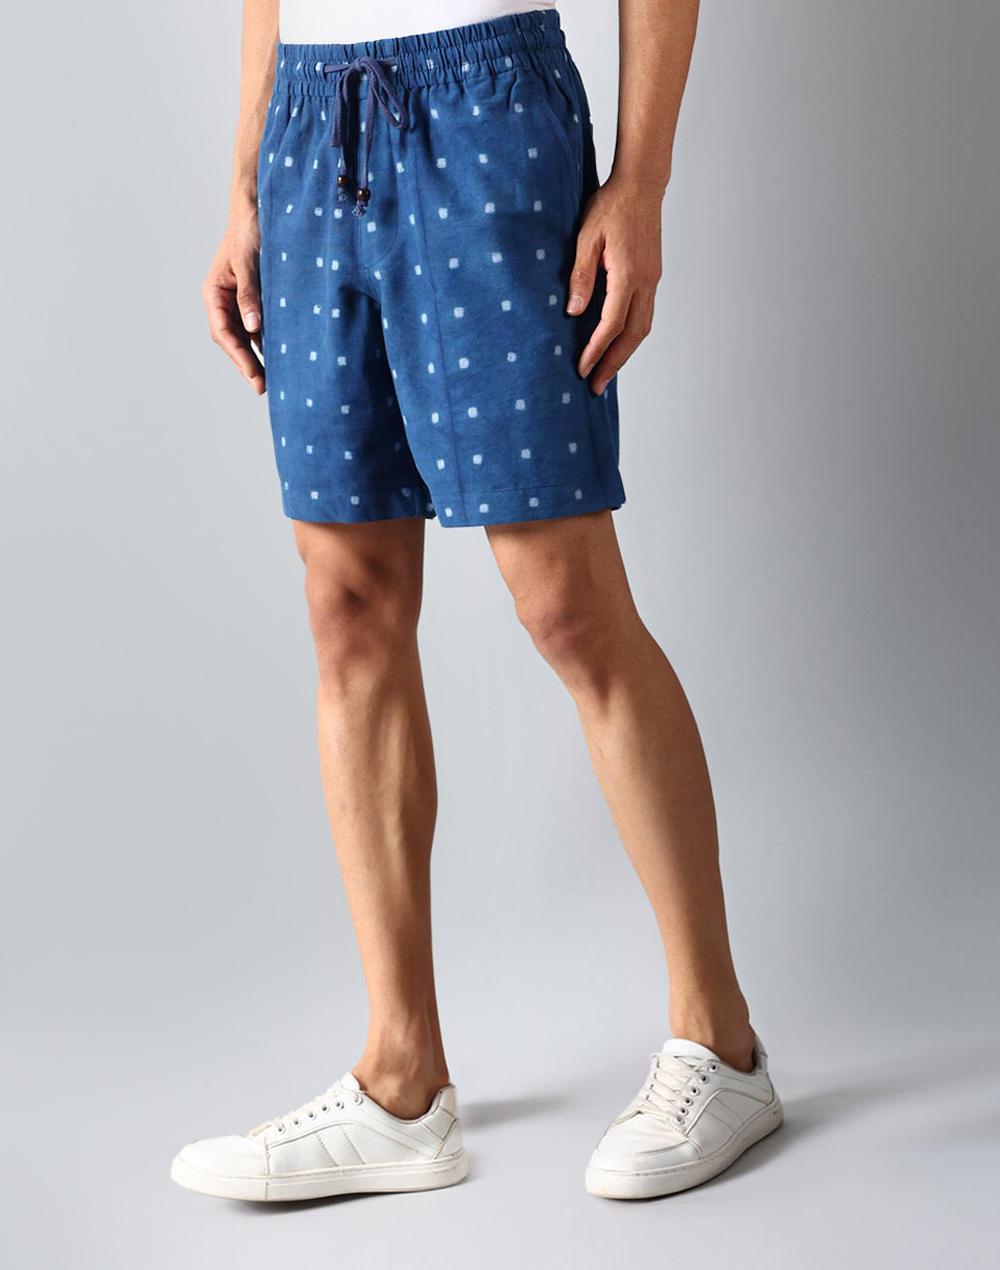 indigo-cotton-tie-and-dye-drawstring-shorts